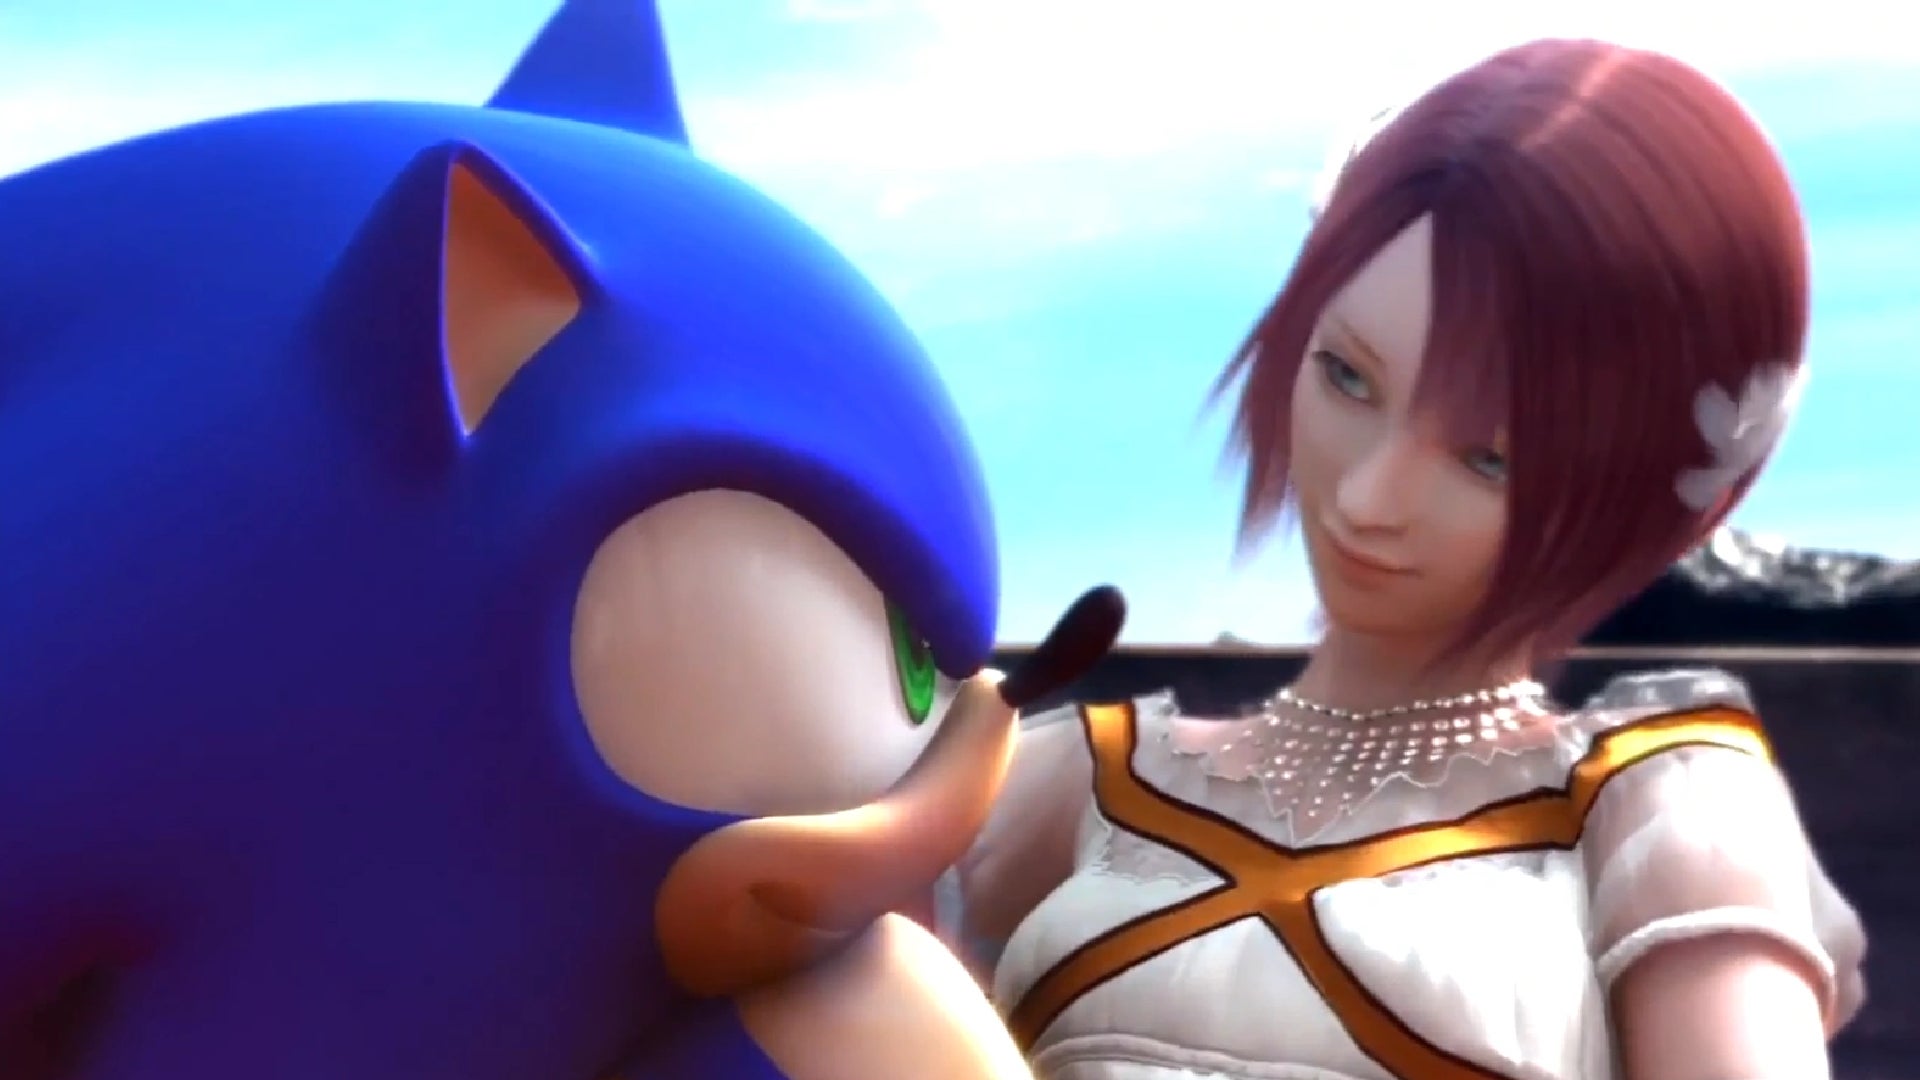 Jangan khawatir, Sonic tidak akan mencium wanita manusia lagi